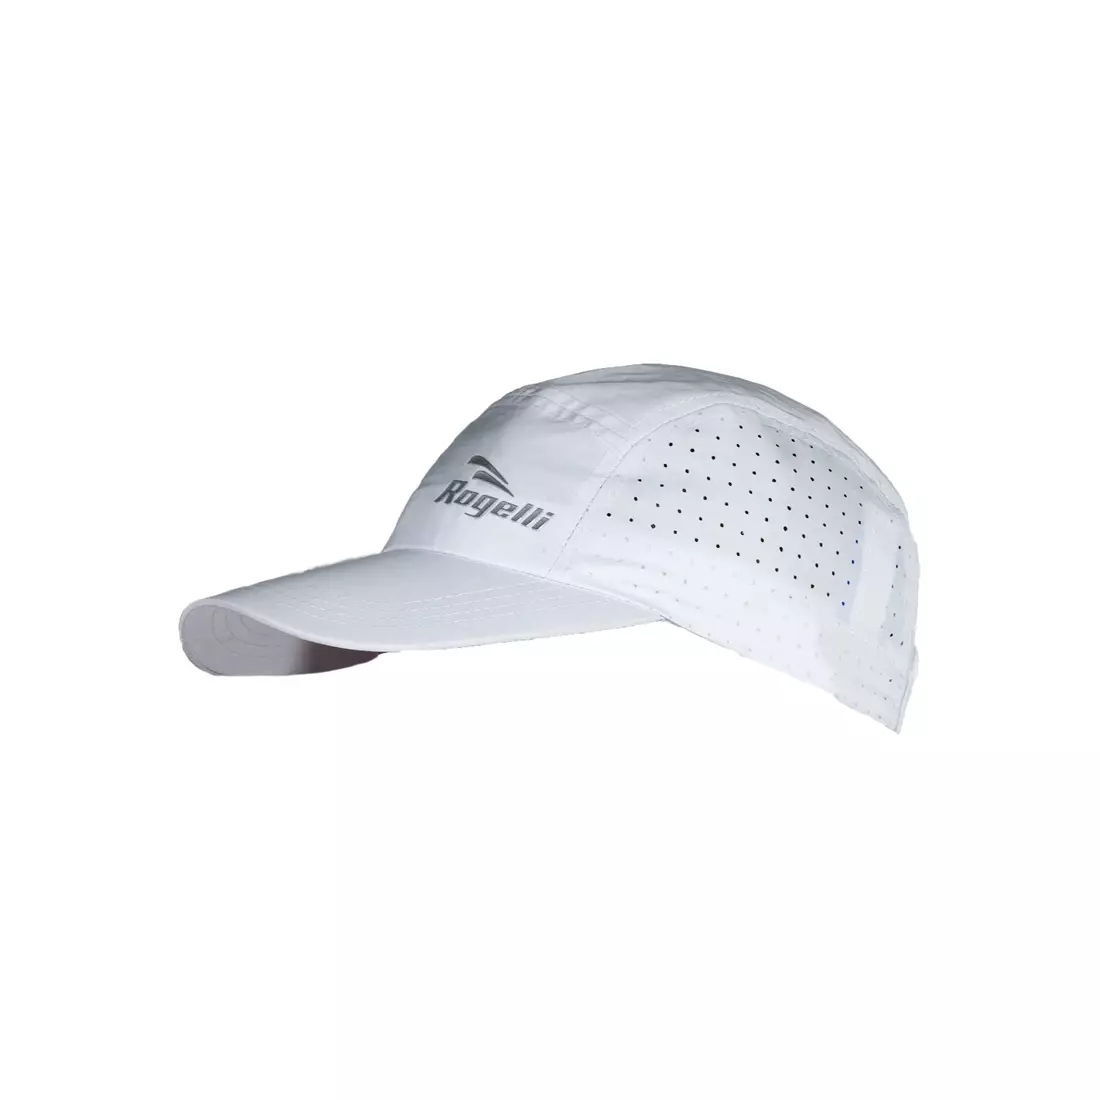 ROGELLI SS18 RUN 890.019 LIBERTY 2.0 - unisex baseball cap, white